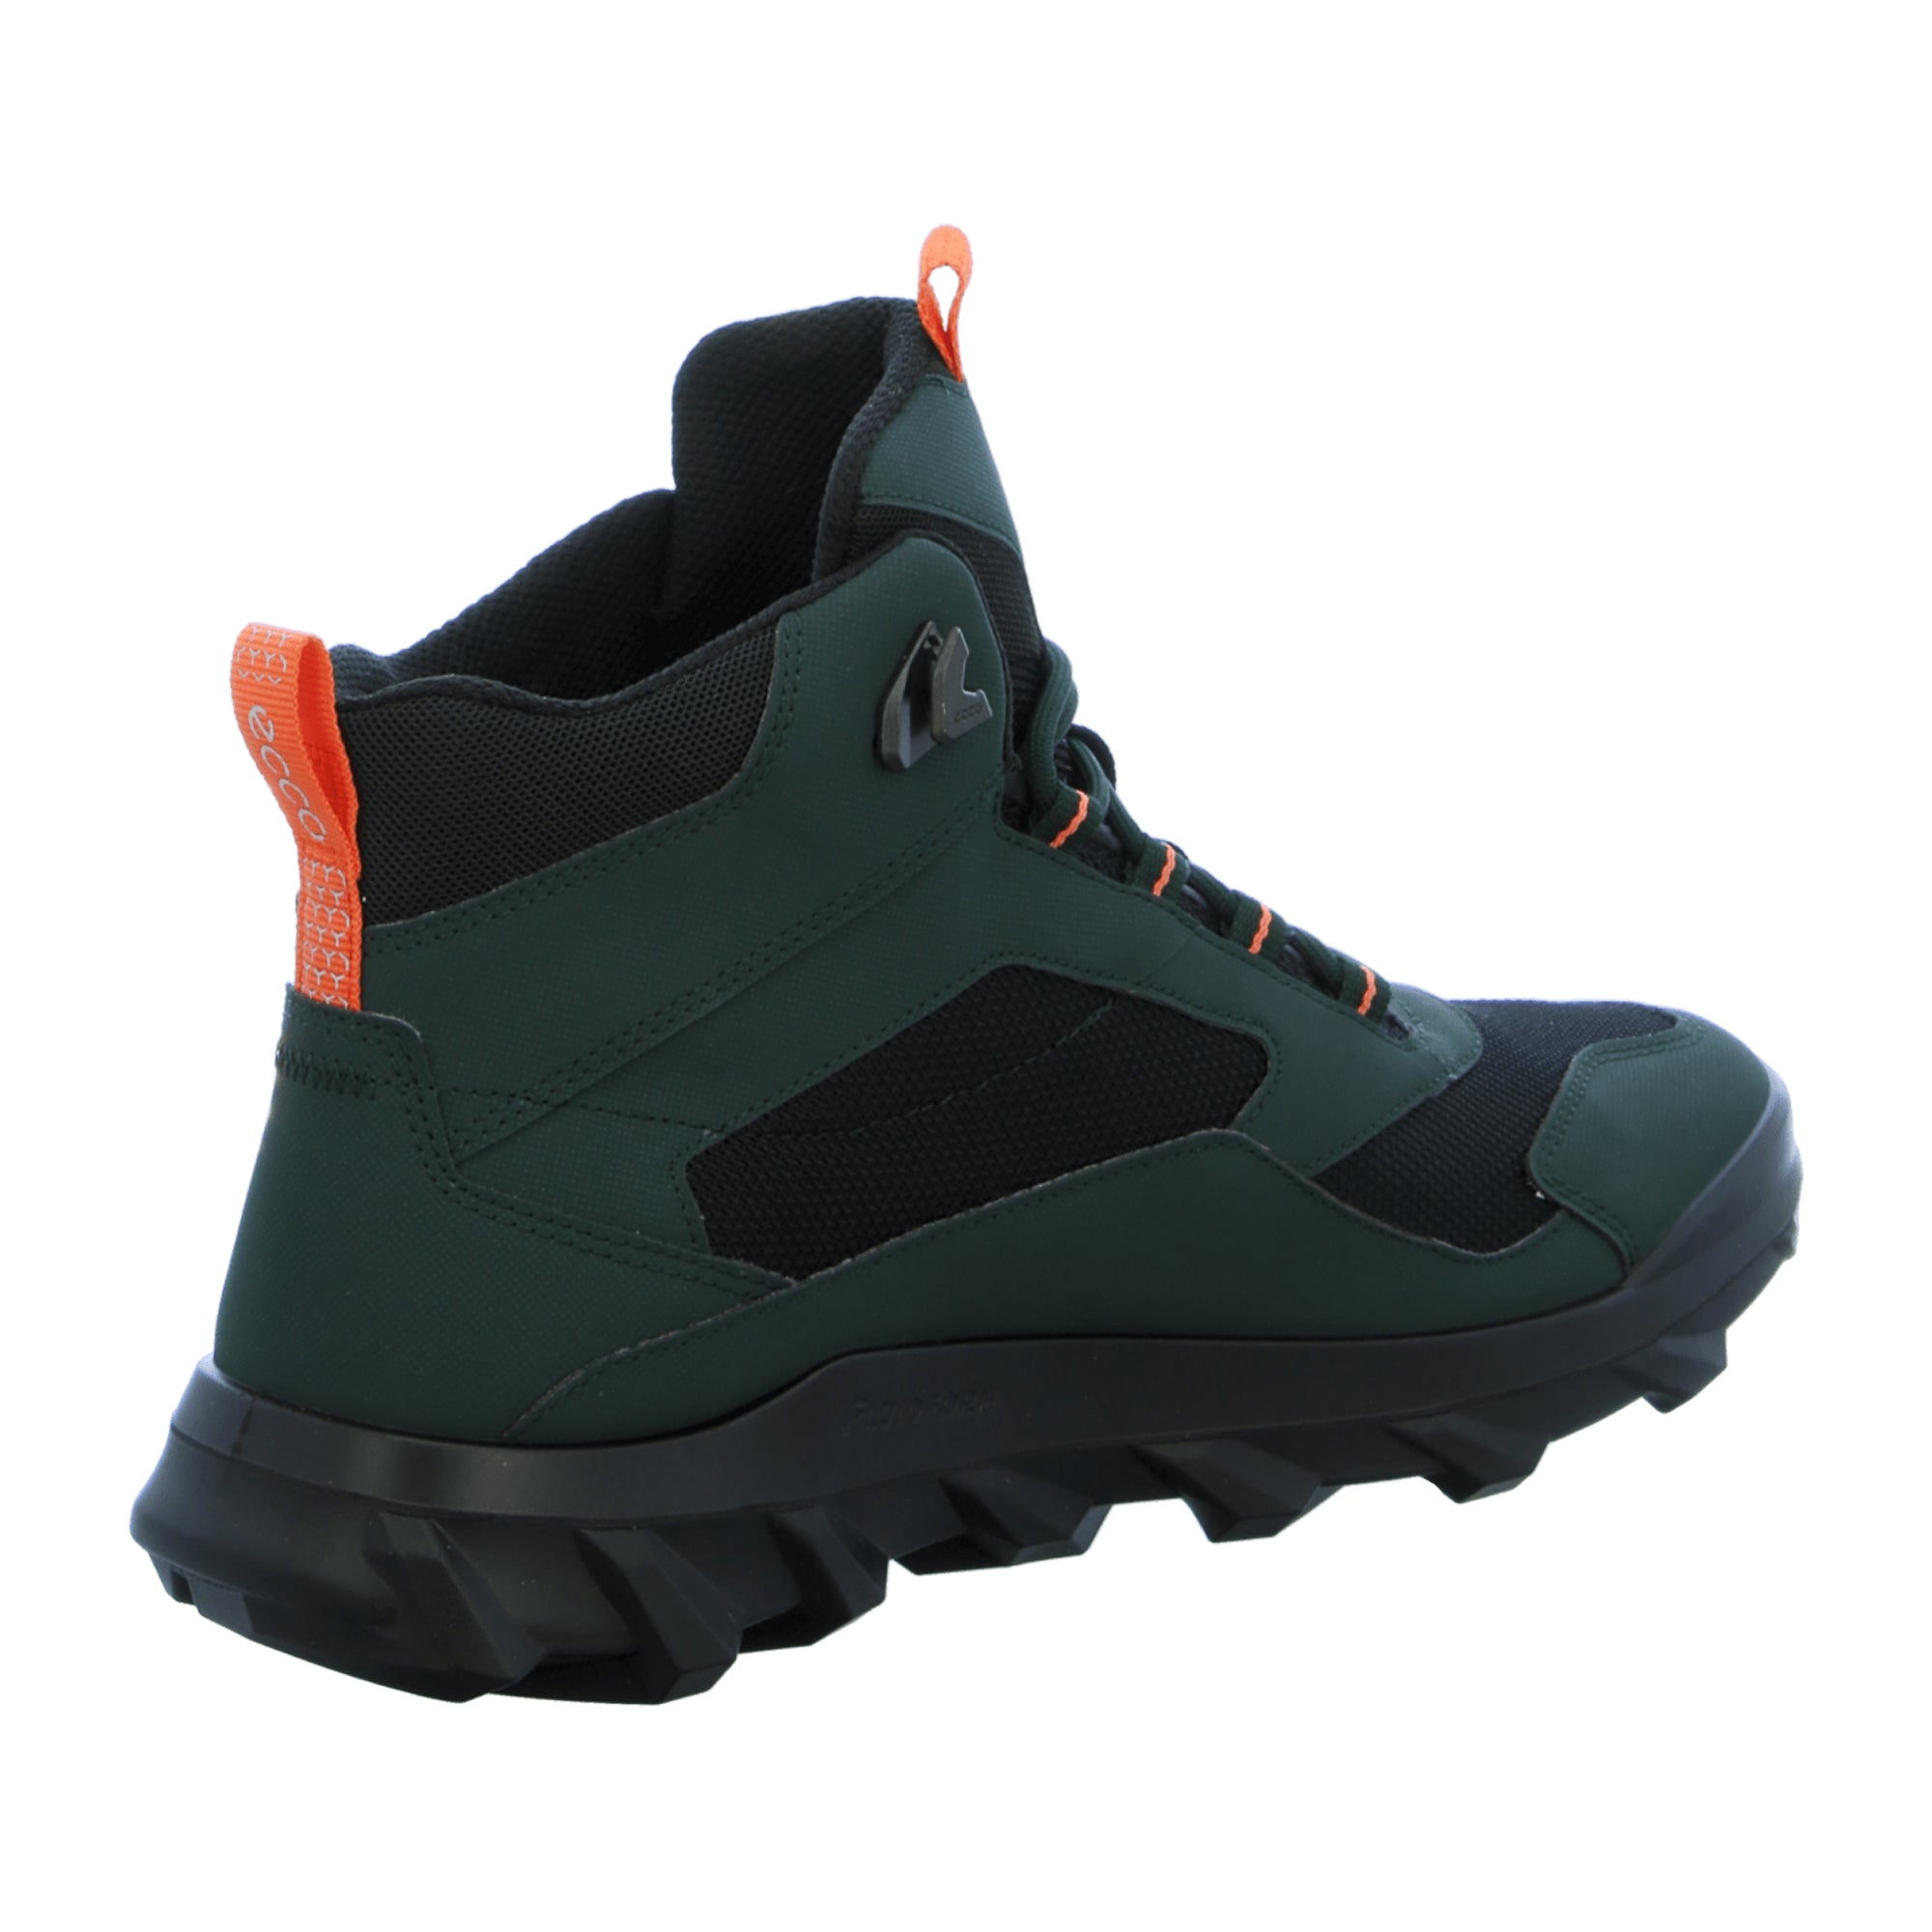 Ecco MX Men's Gore-Tex Boots - Waterproof, Durable Fashion in Black